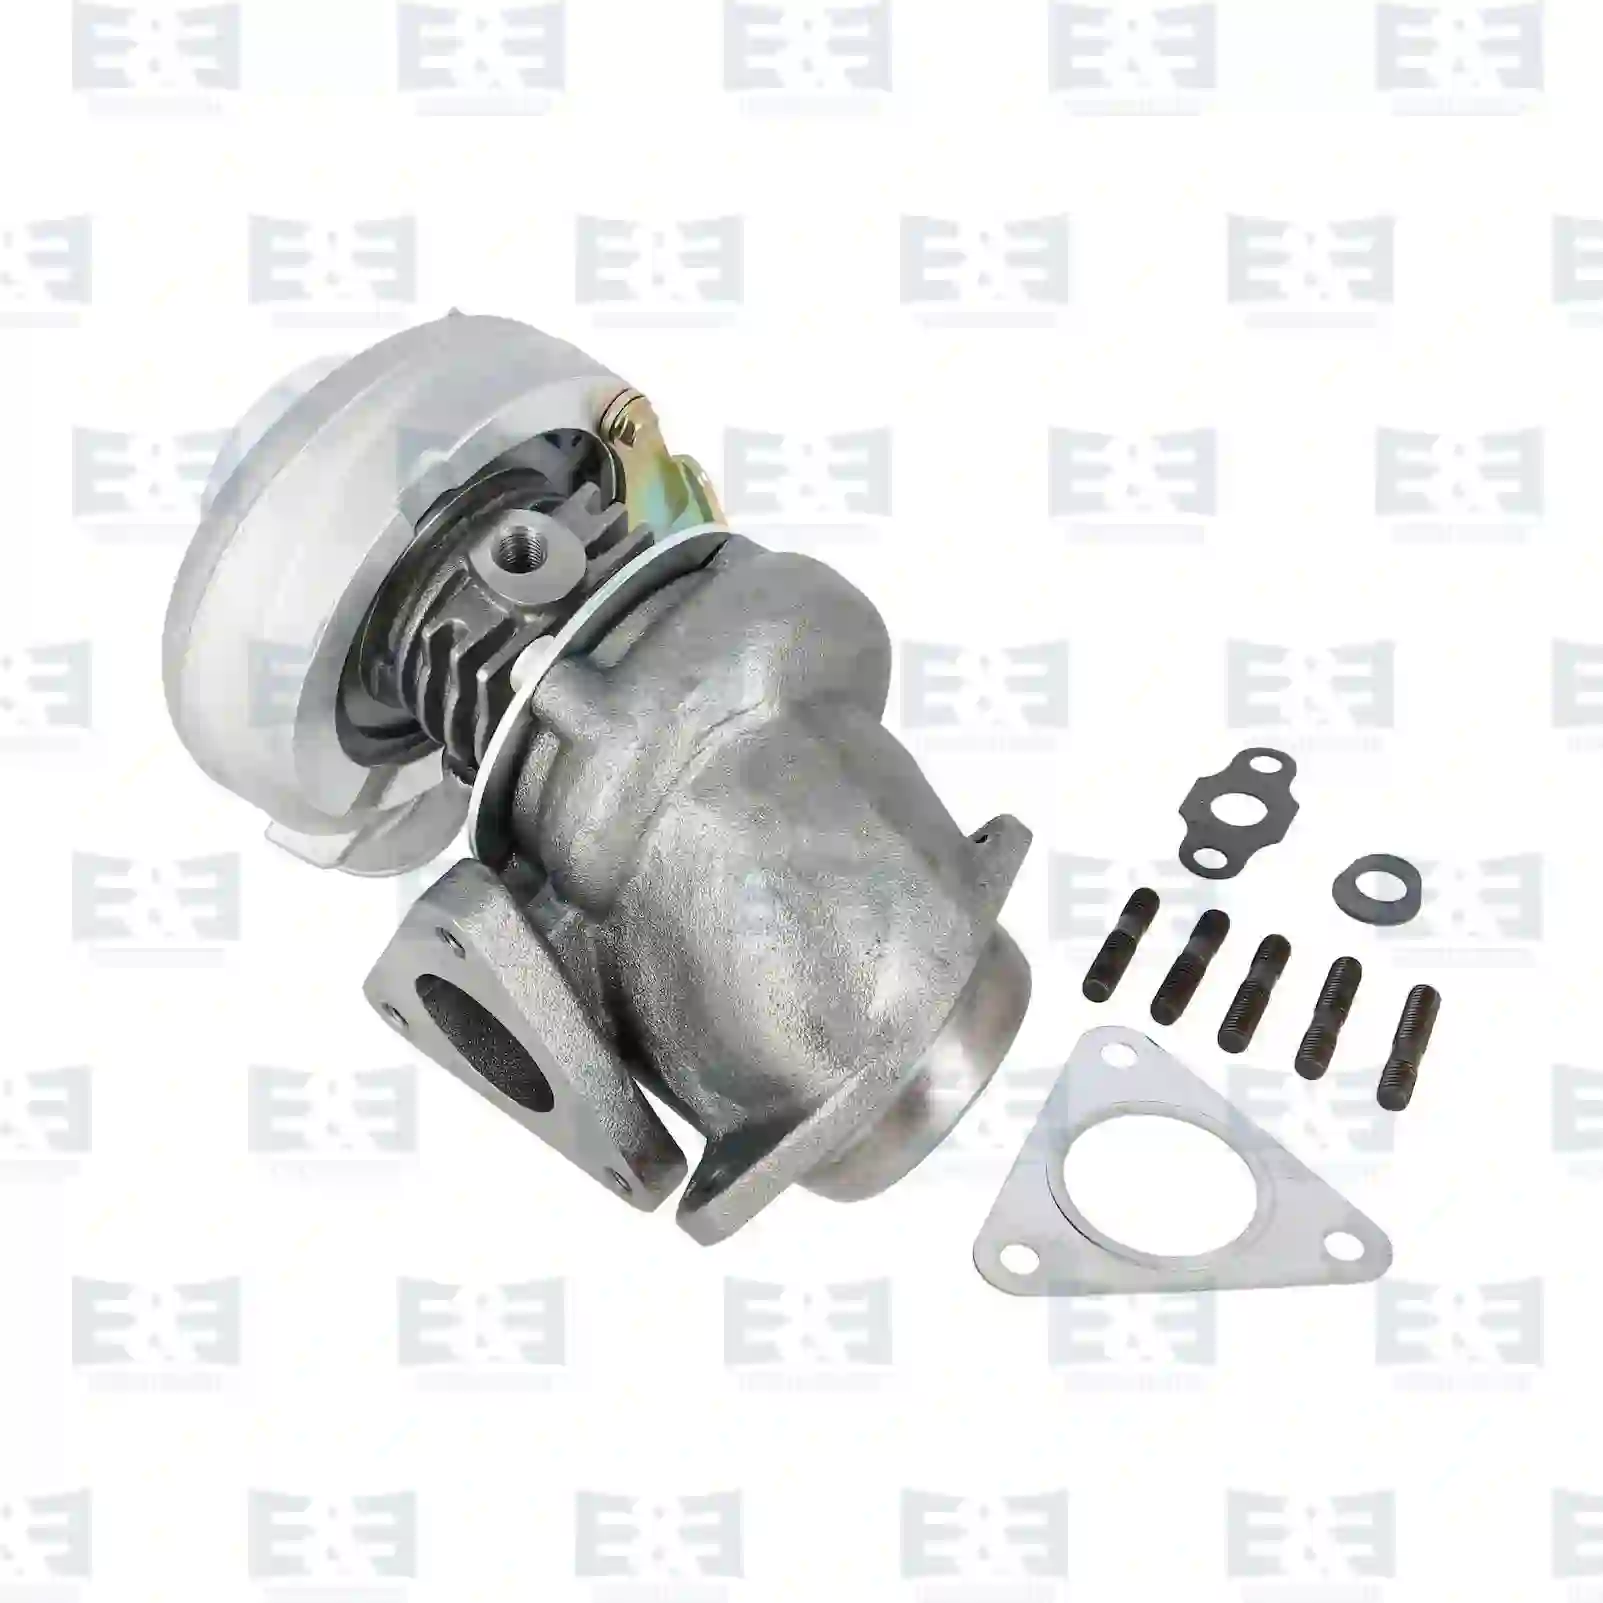 Turbocharger, with gasket kit, 2E2200753, 6010900280, 6010900480, 6010960099, 6020900880, 6020901380, 6020960199, 6020960699, 6020960899, 602096089980 ||  2E2200753 E&E Truck Spare Parts | Truck Spare Parts, Auotomotive Spare Parts Turbocharger, with gasket kit, 2E2200753, 6010900280, 6010900480, 6010960099, 6020900880, 6020901380, 6020960199, 6020960699, 6020960899, 602096089980 ||  2E2200753 E&E Truck Spare Parts | Truck Spare Parts, Auotomotive Spare Parts